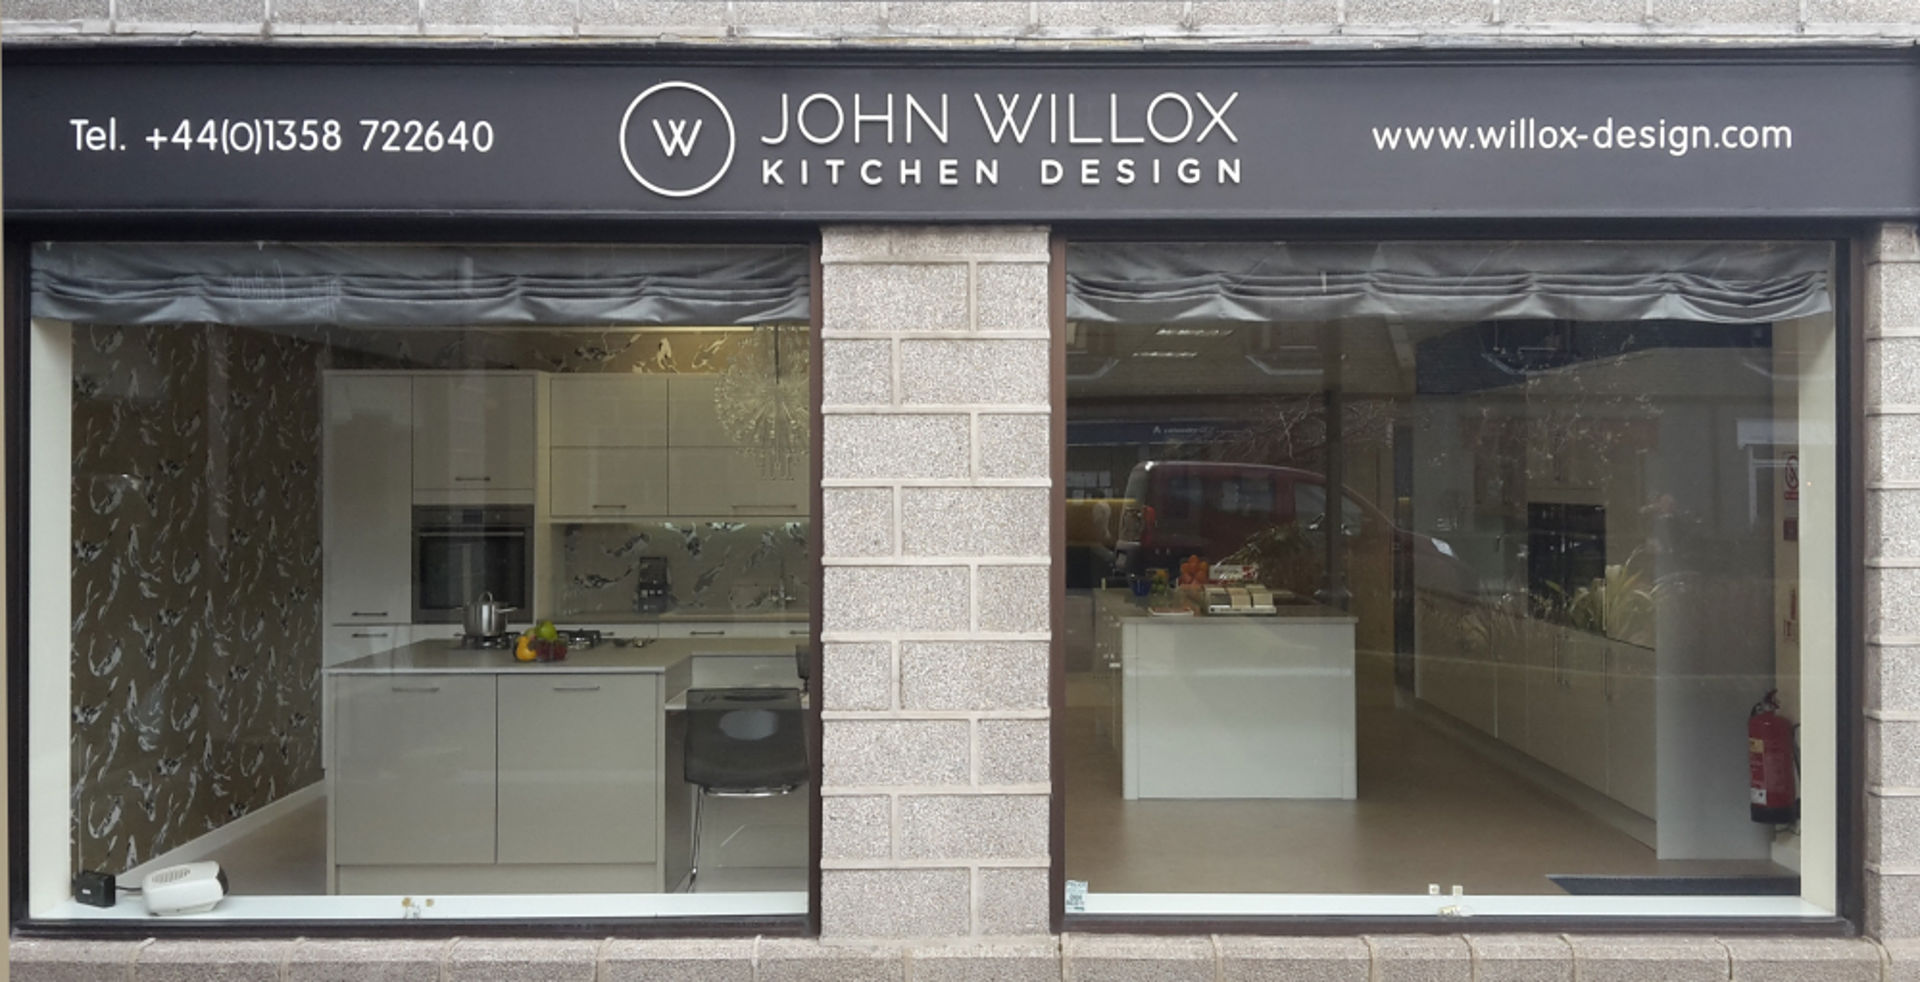 john willox kitchen design ltd